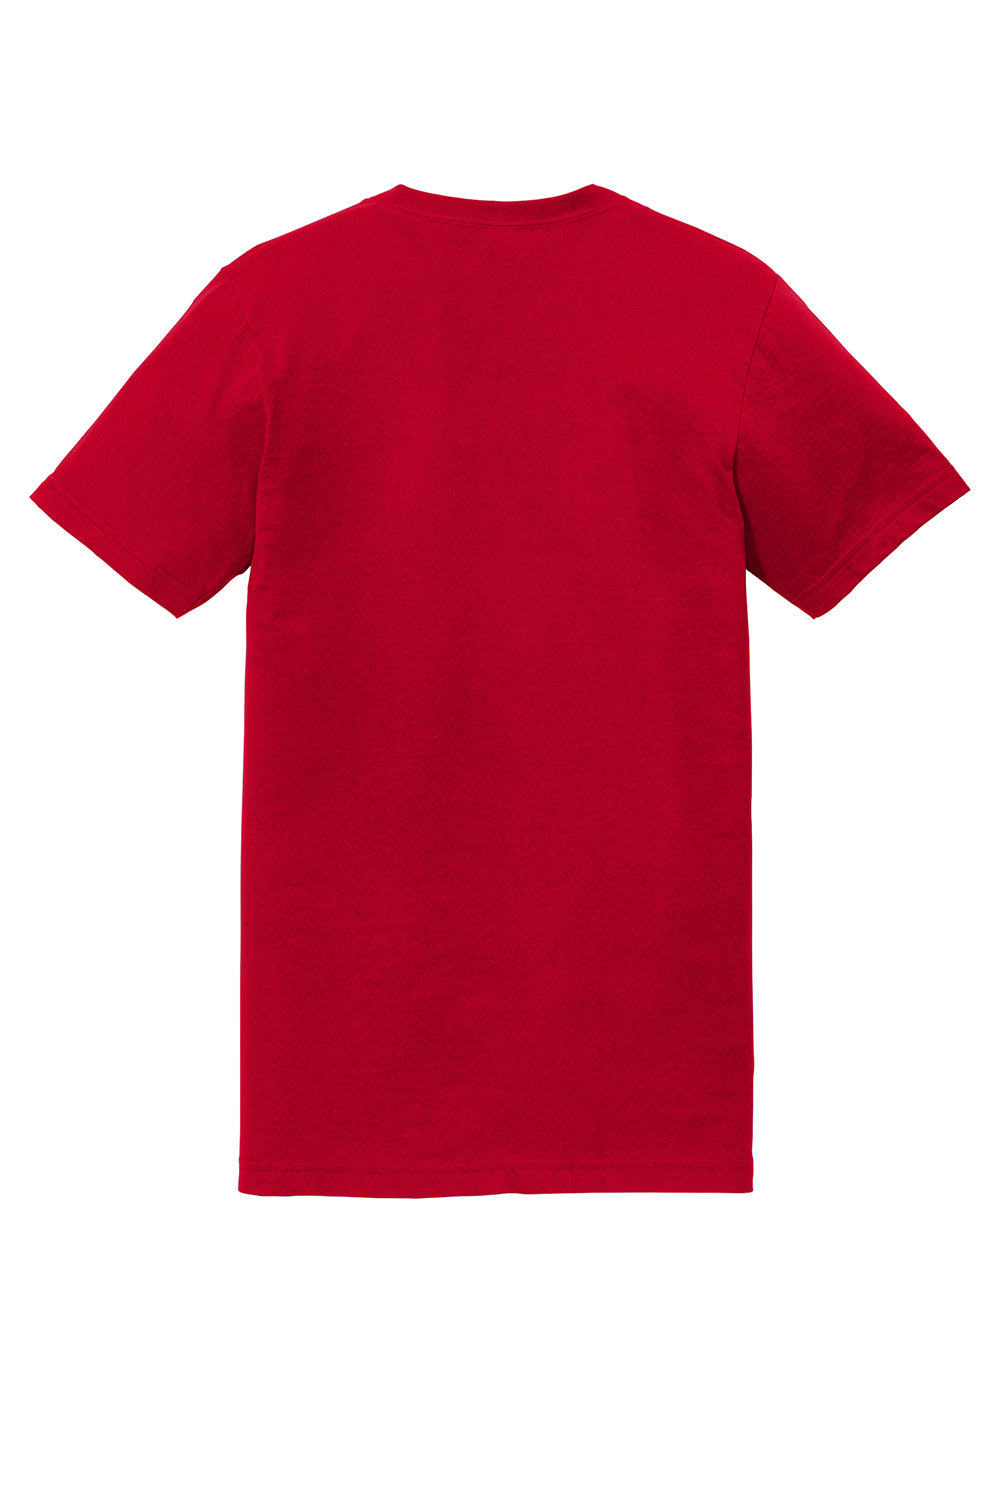 American Apparel 2001 Mens Fine Jersey Short Sleeve Crewneck T-Shirt Red Flat Back